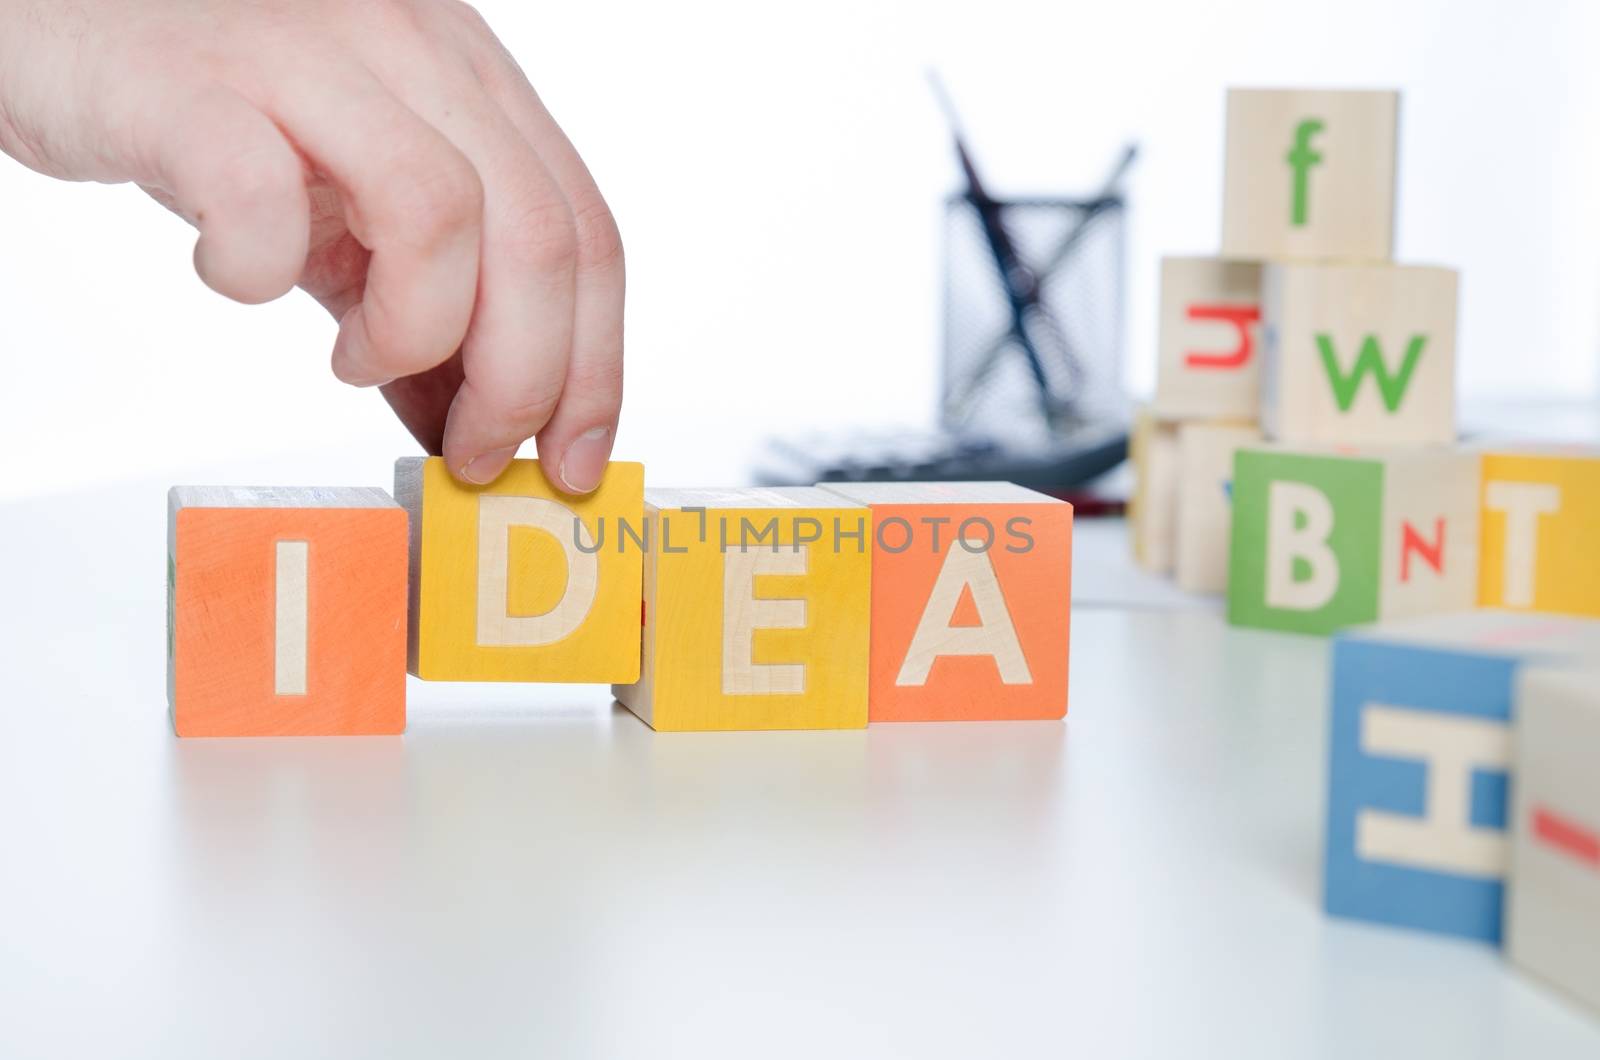 IDEA word with colorful blocks. idea innovation concept business block alphabet plan hand concept